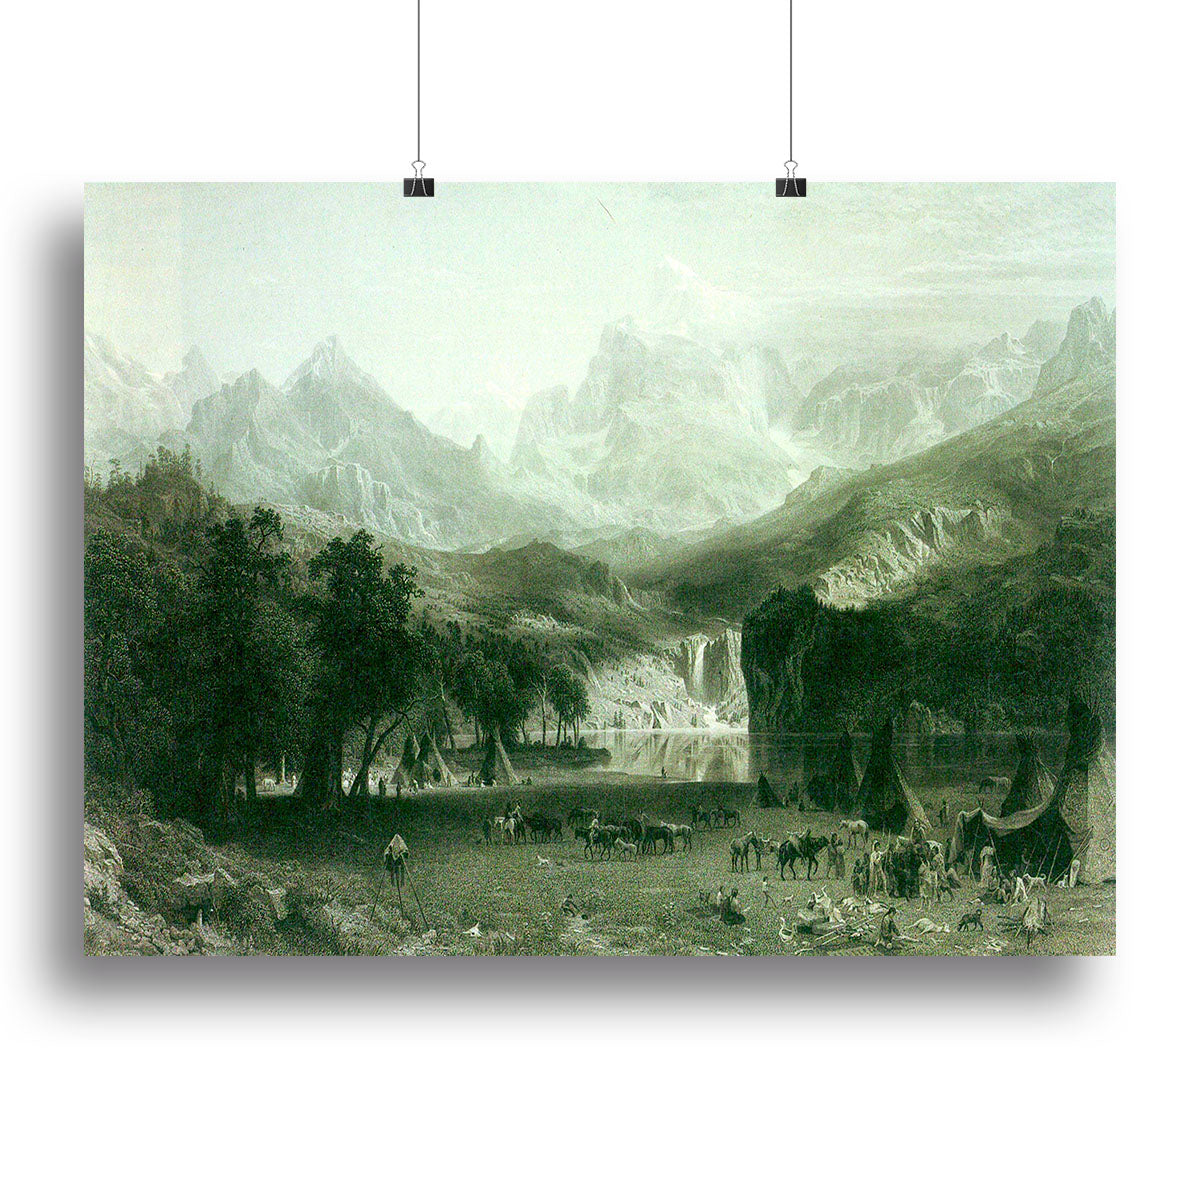 Rockies at Lander's Peak Canvas Print or Poster - Canvas Art Rocks - 2